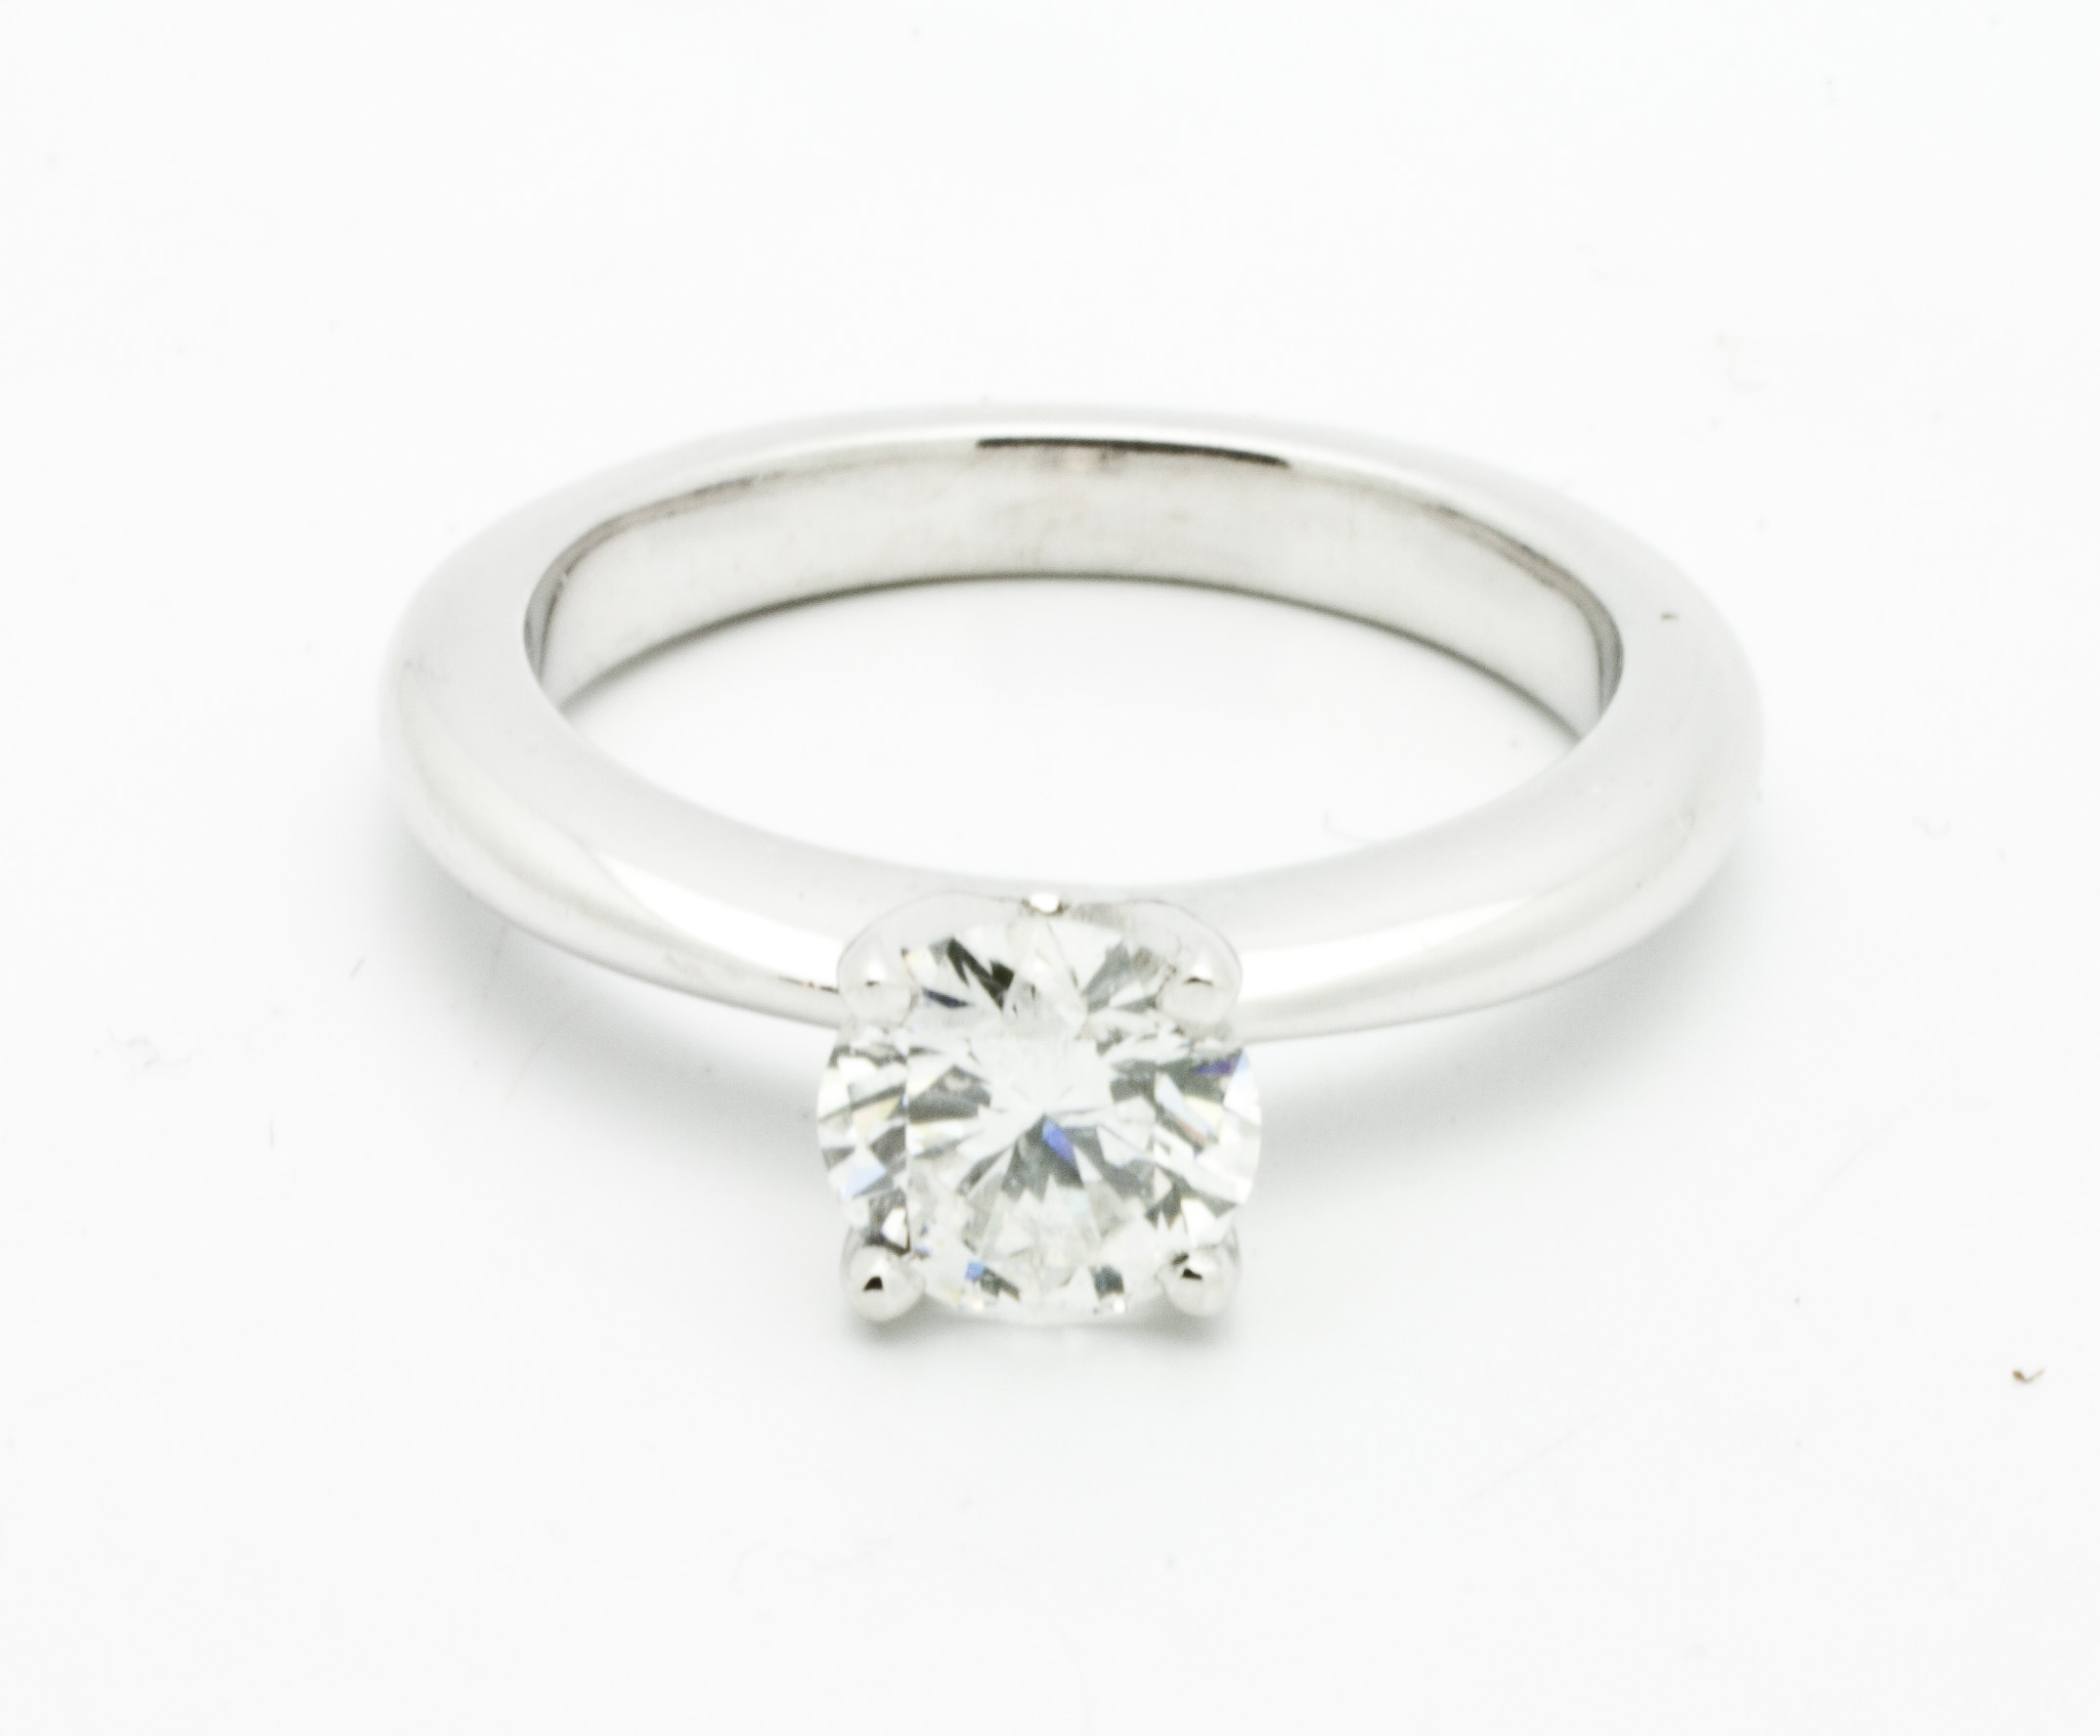 Details about   1.00Ct Brilliant Cut VVS Moissanite Art Deco Engagement Ring 925 Sterling Silver 